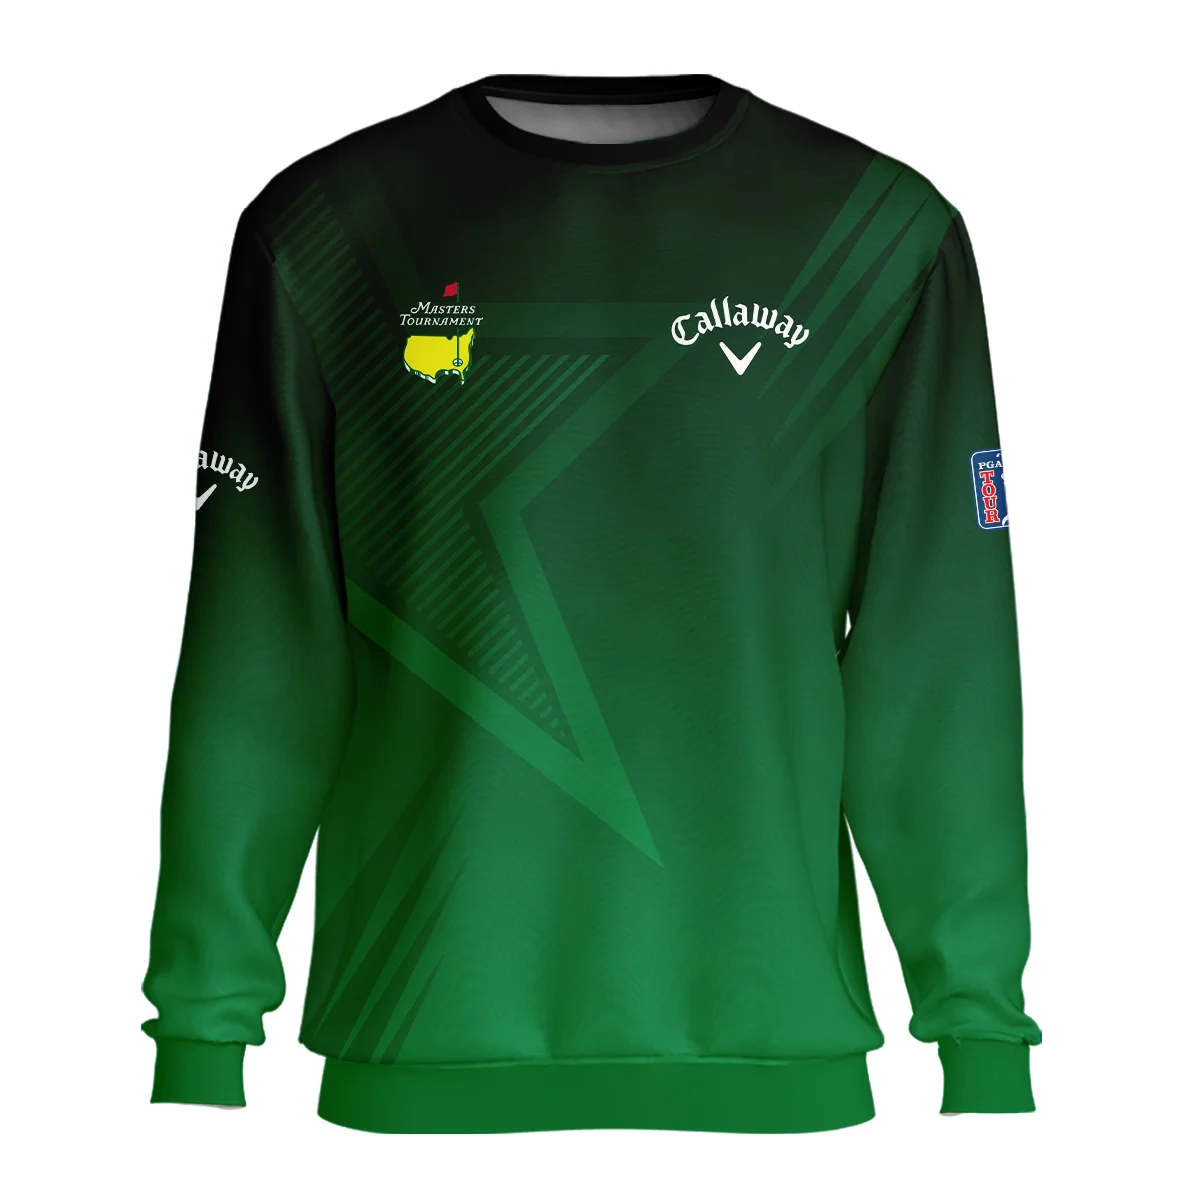 Callaway Masters Tournament Unisex Sweatshirt Dark Green Gradient Star Pattern Golf Sports Sweatshirt